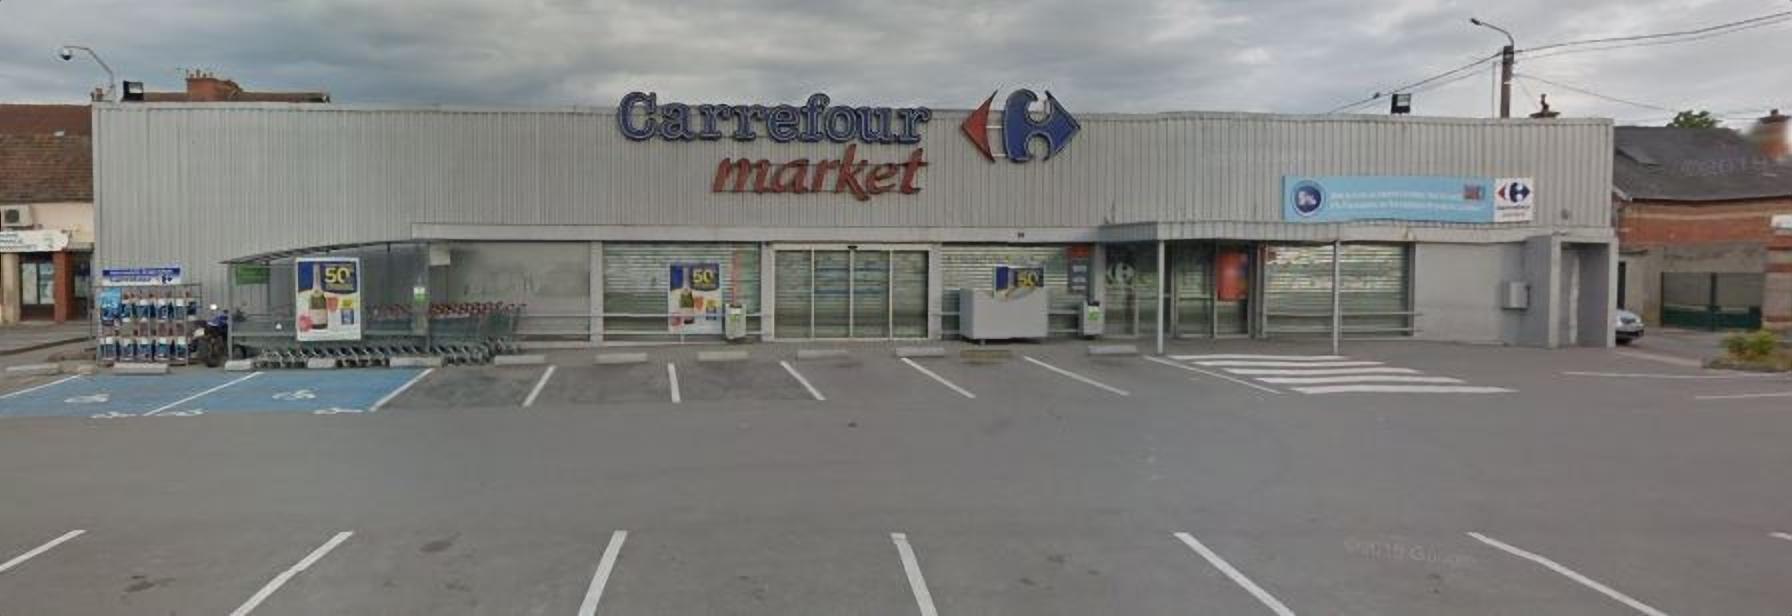 Carrefour Guignicourt